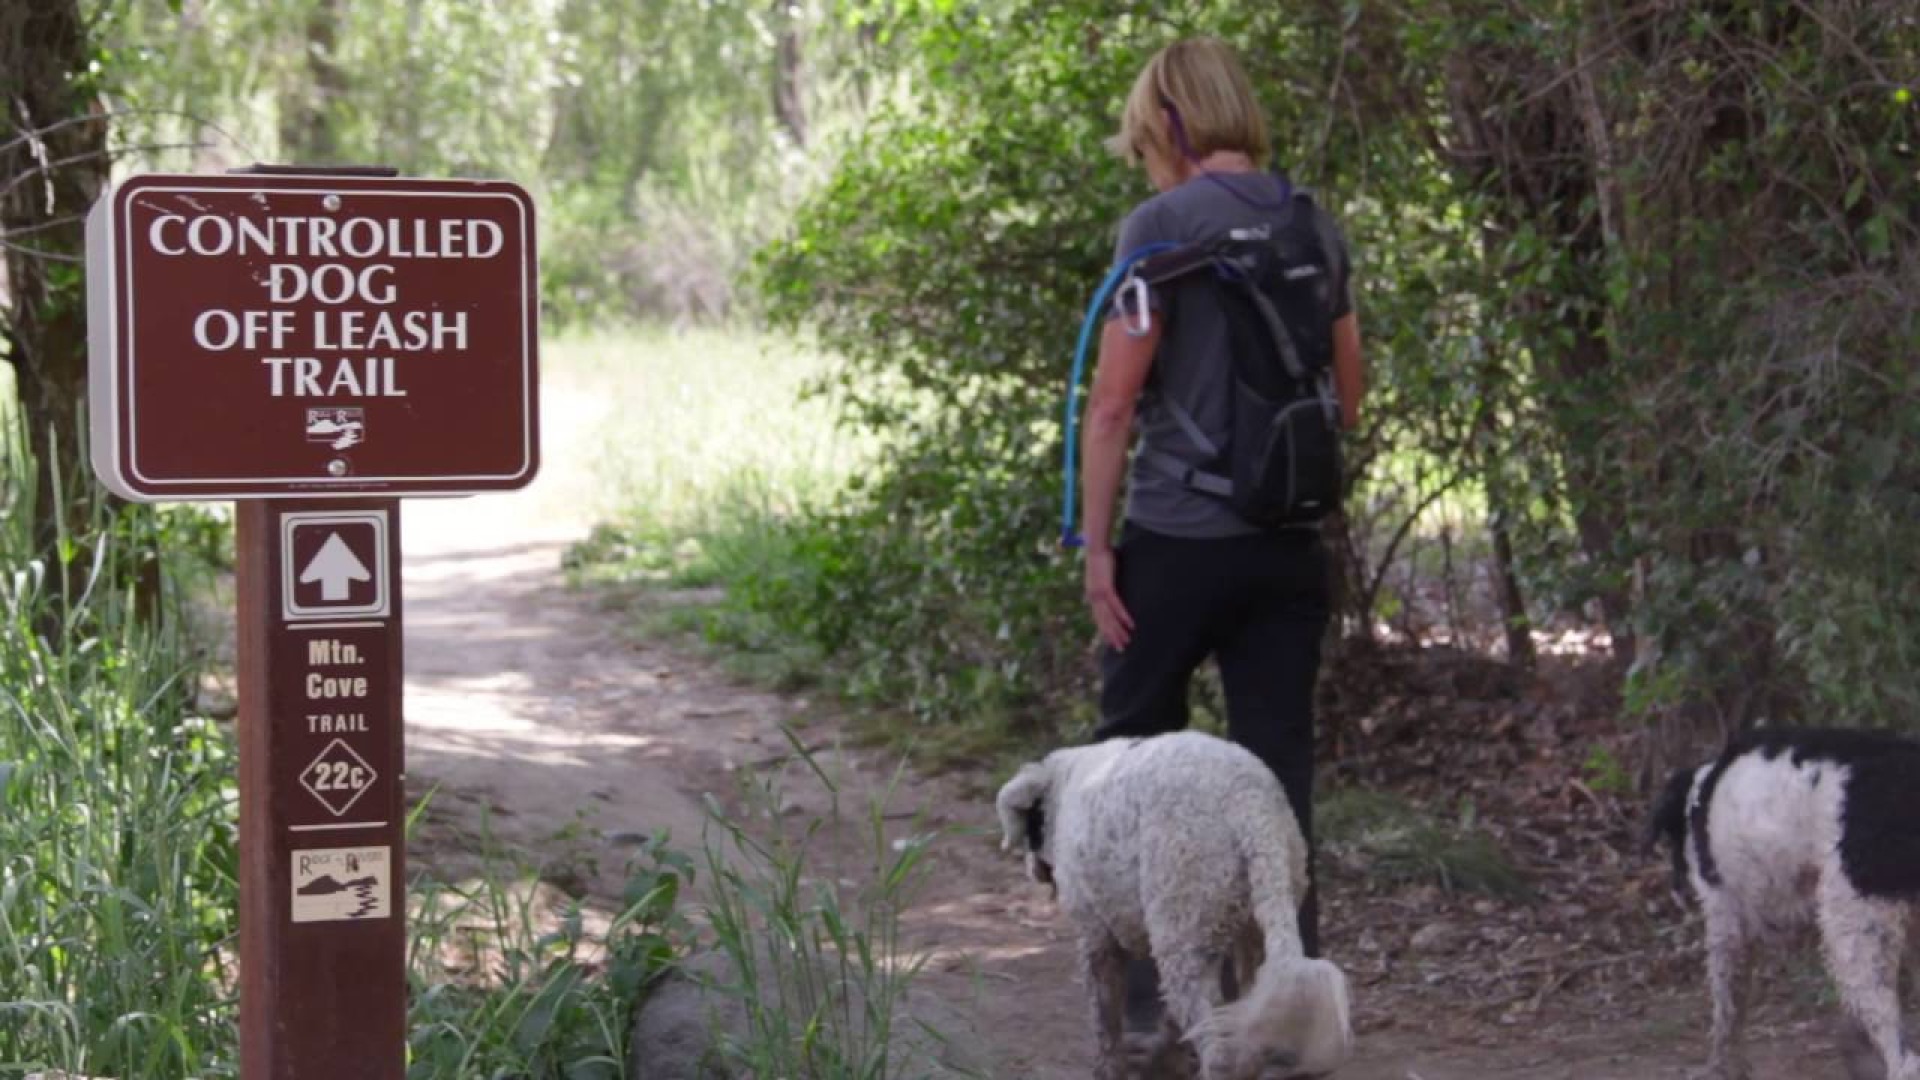 Off leash trail sign